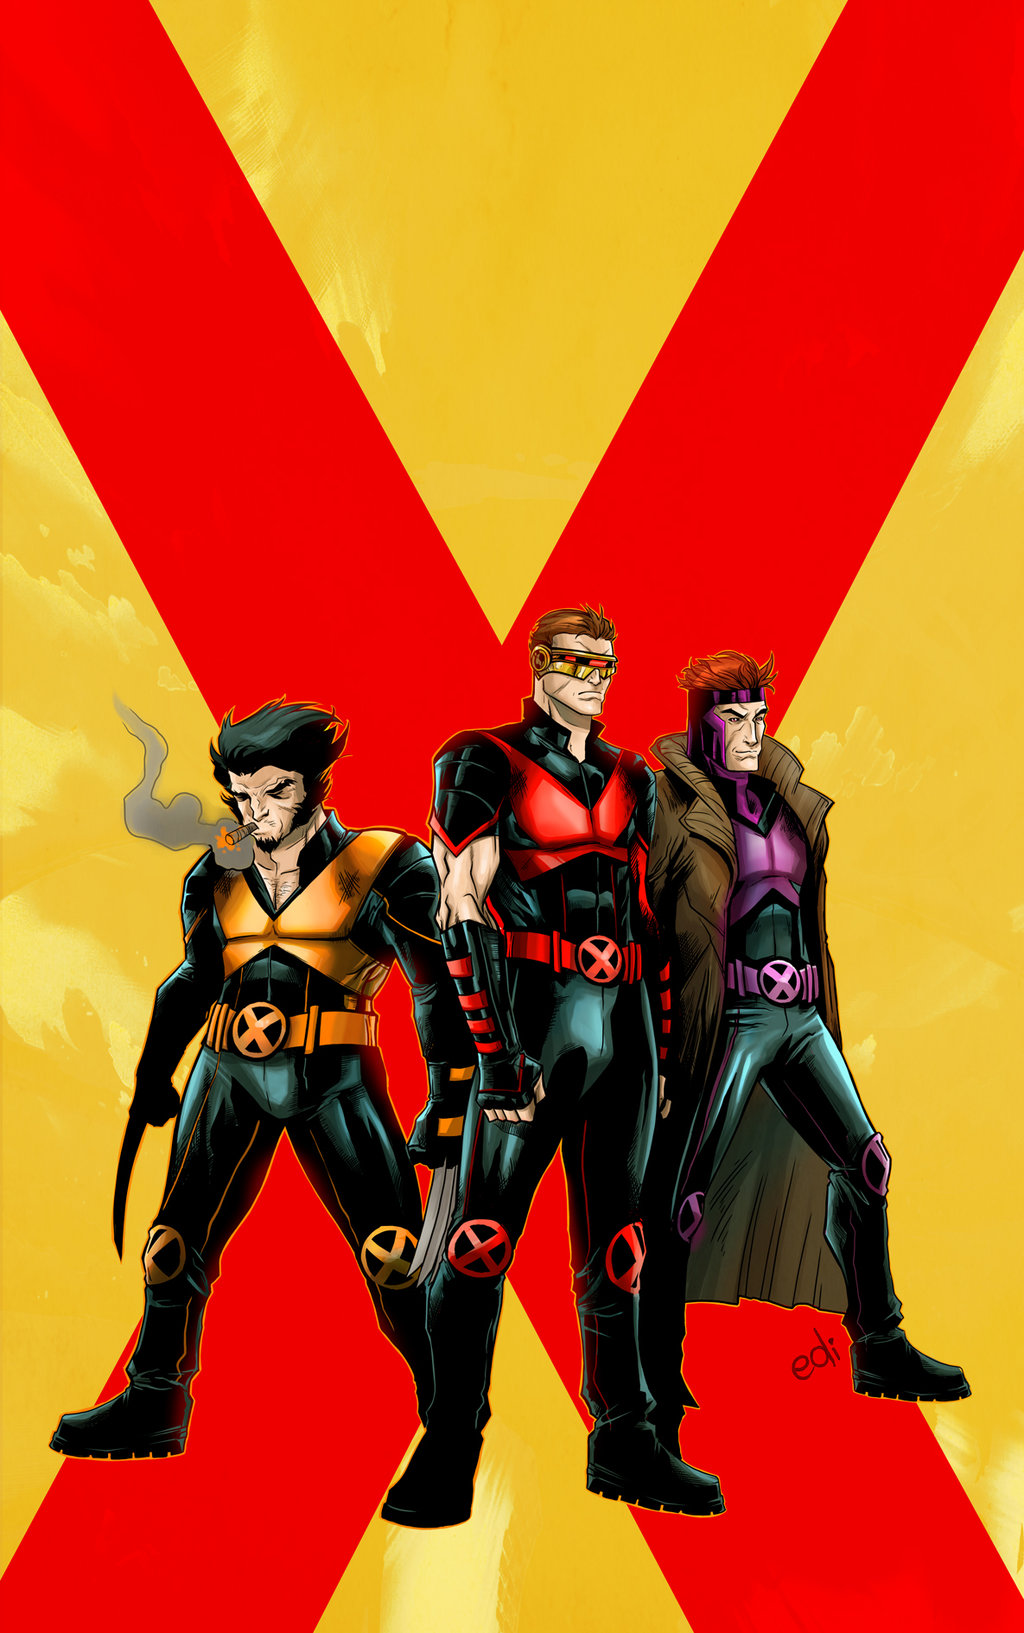 Amazing X-Men #3